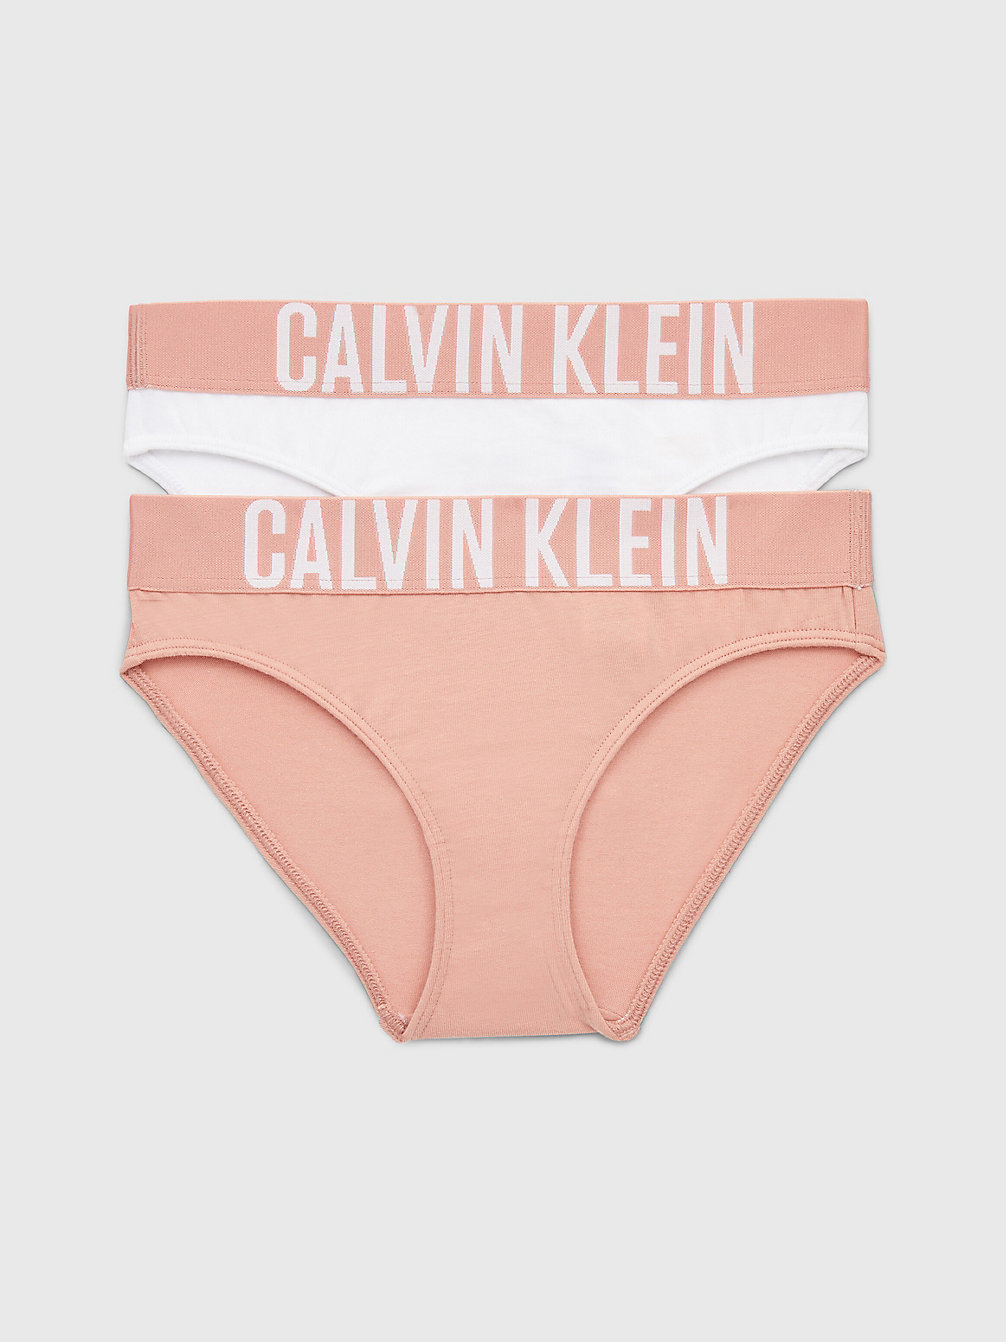 Confezione Da 2 Slip Bikini Bambina - Intense Power > PINKMOCHA/PVHWHITE > undefined girls > Calvin Klein